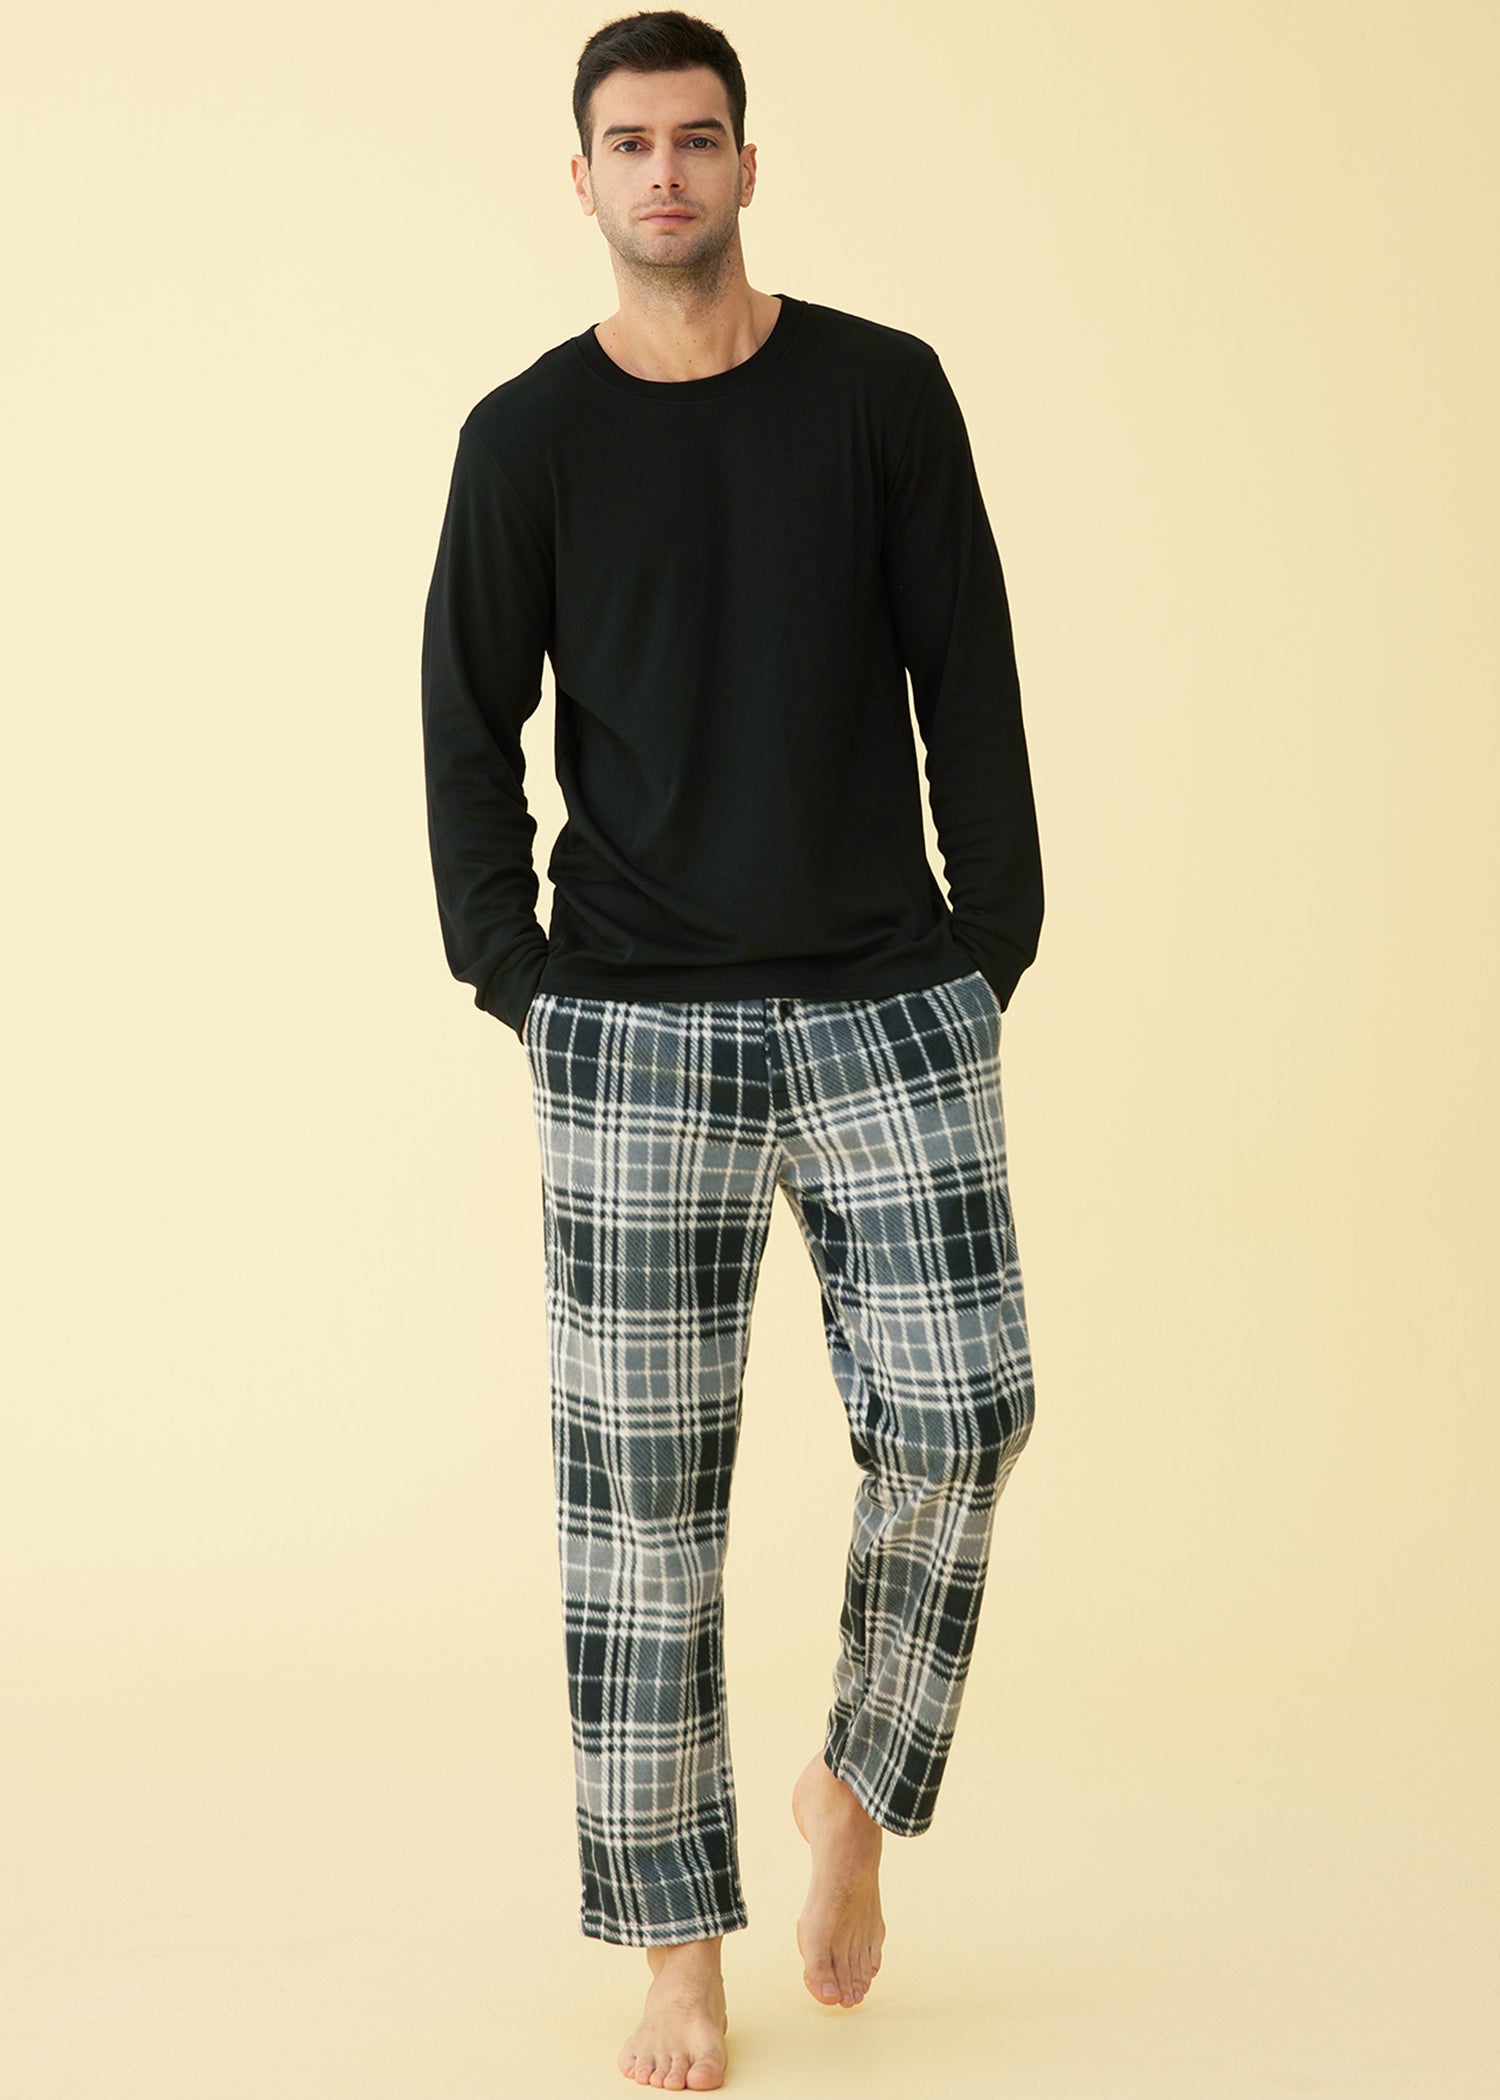 Mens Checked Woven Pyjama Bottoms Cotton PJ Lounge Pants Comfy